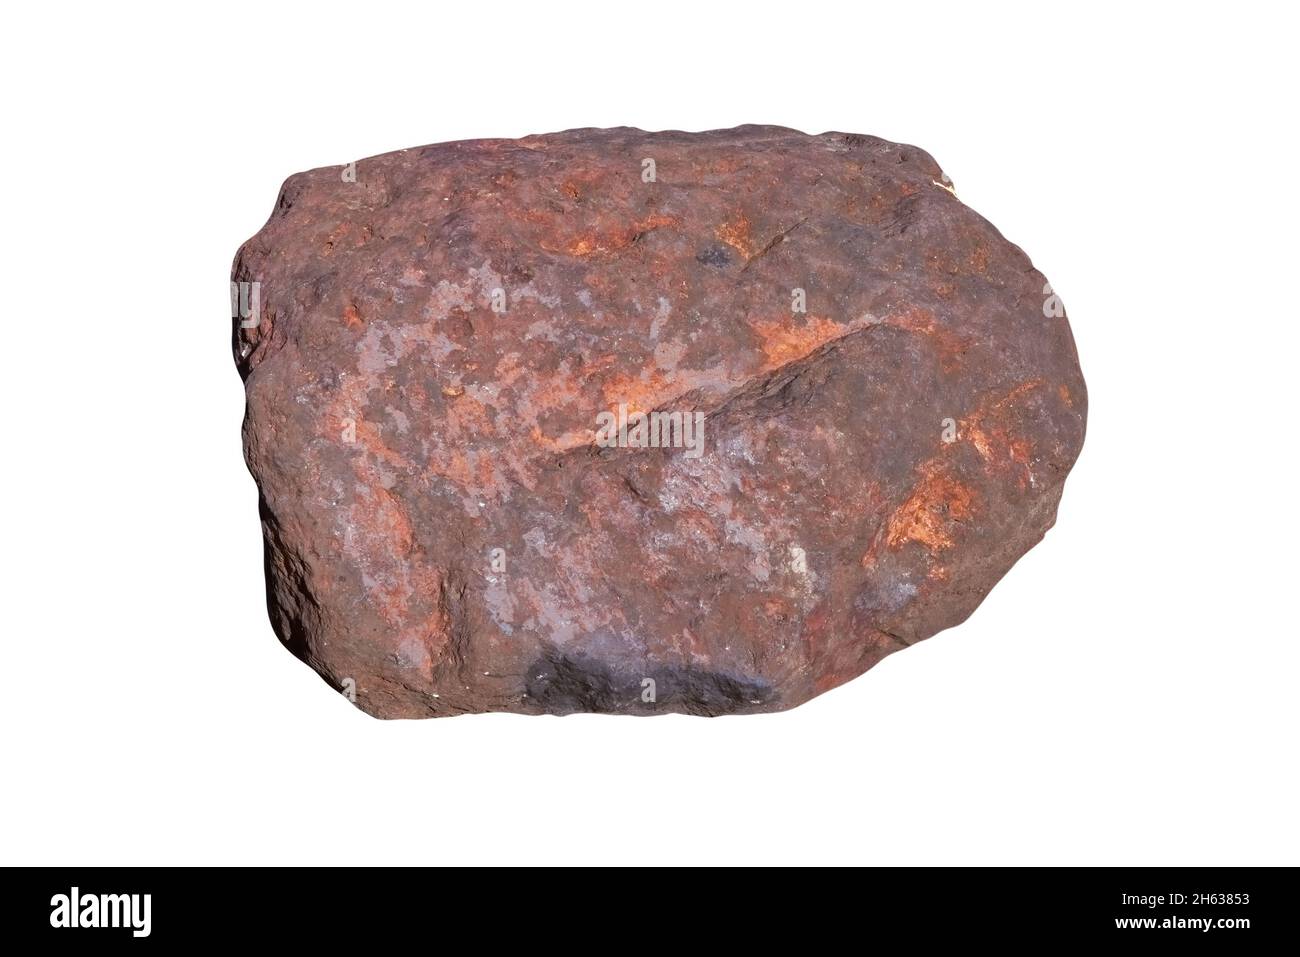 Specimen natural rock hematite, iron ore mineral stone isolated on white background close-up. Stock Photo